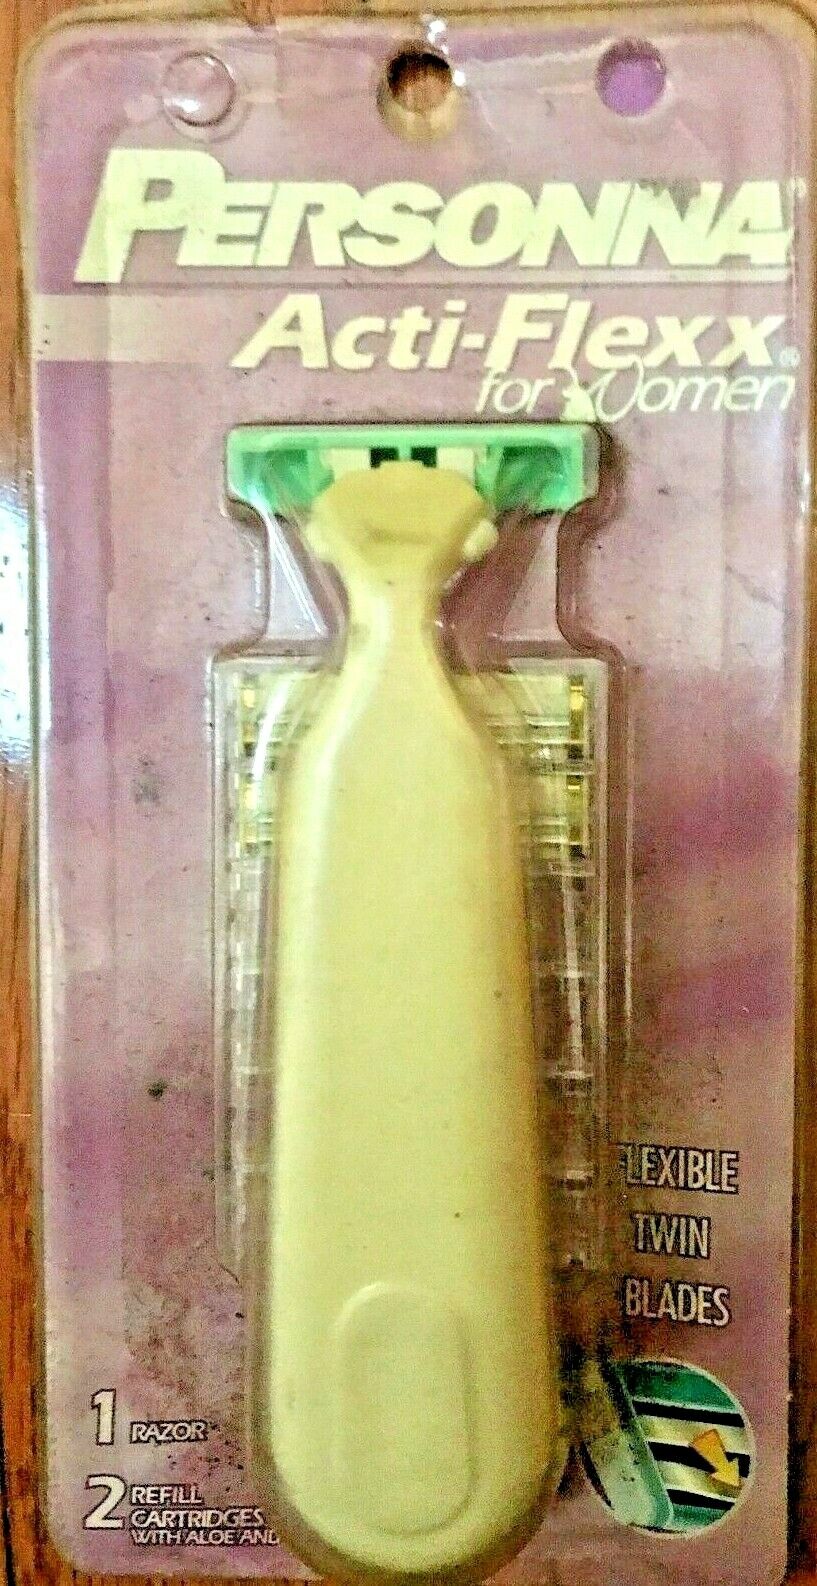 Vintage 2000 PERSONNA Acti - Flexx handle with 2 Cartridges Aloe & Vitamin E 